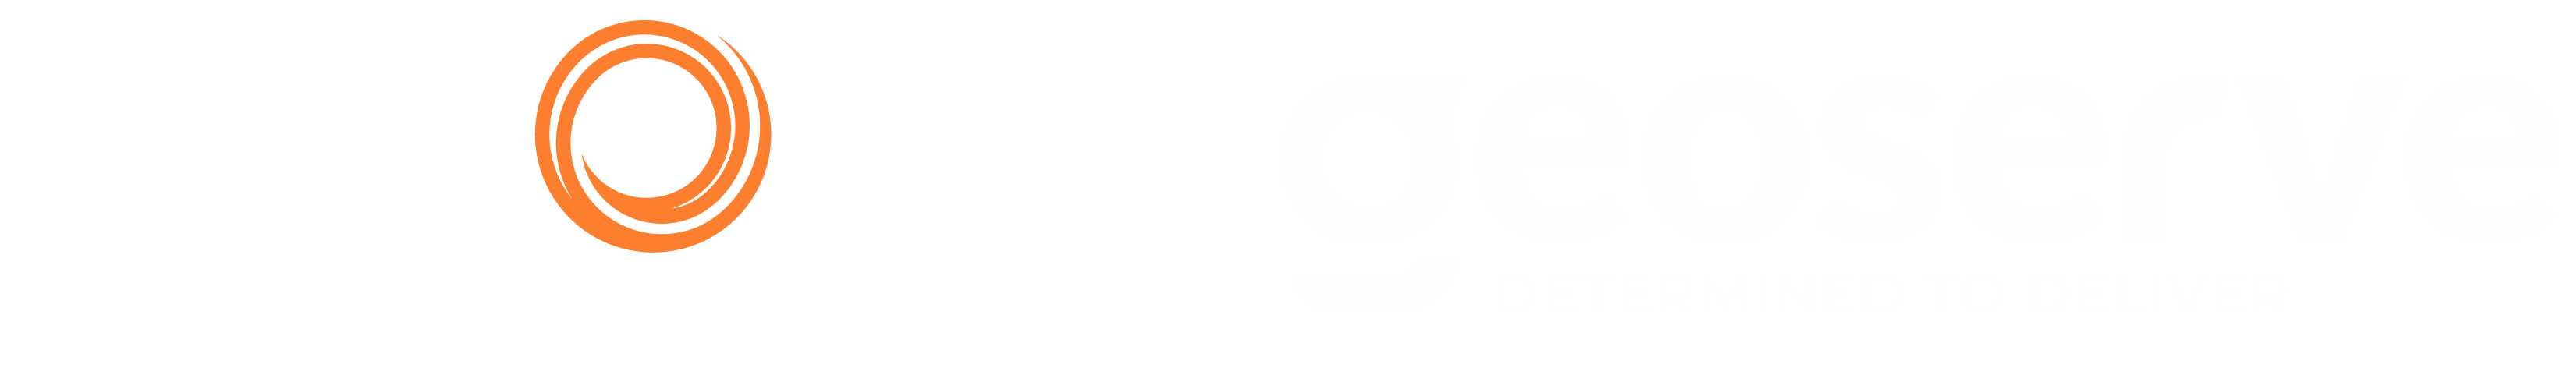 Geoserve + Veson Joint Logo 